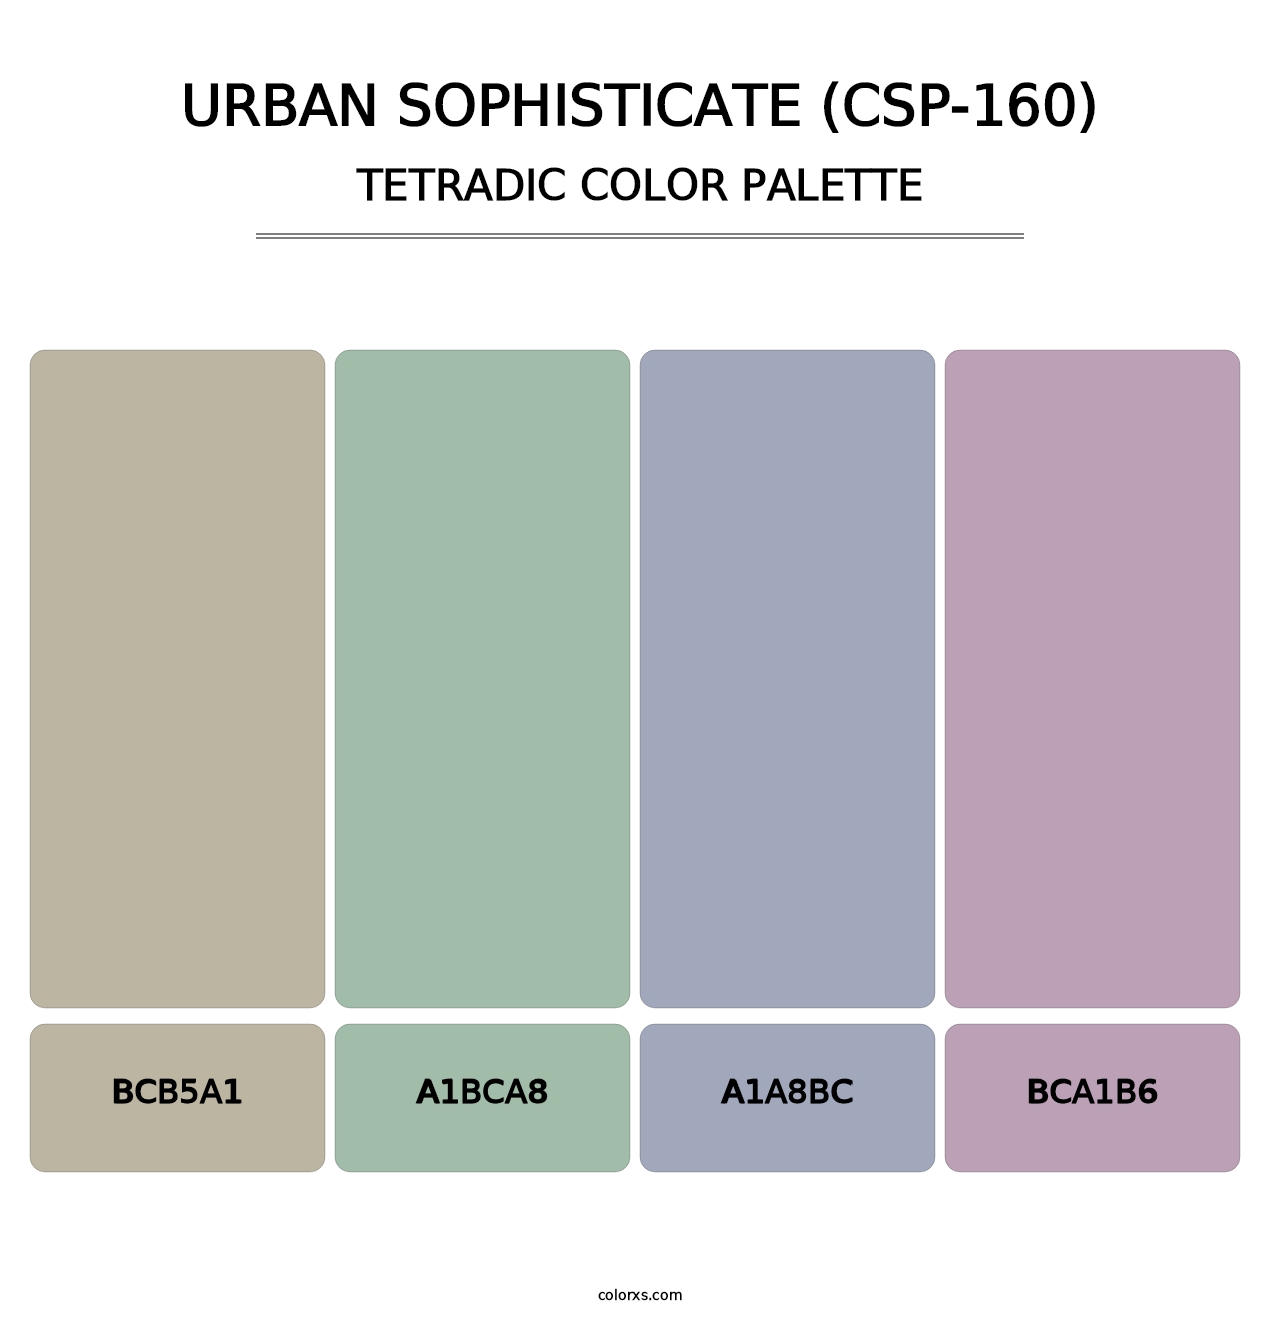 Urban Sophisticate (CSP-160) - Tetradic Color Palette